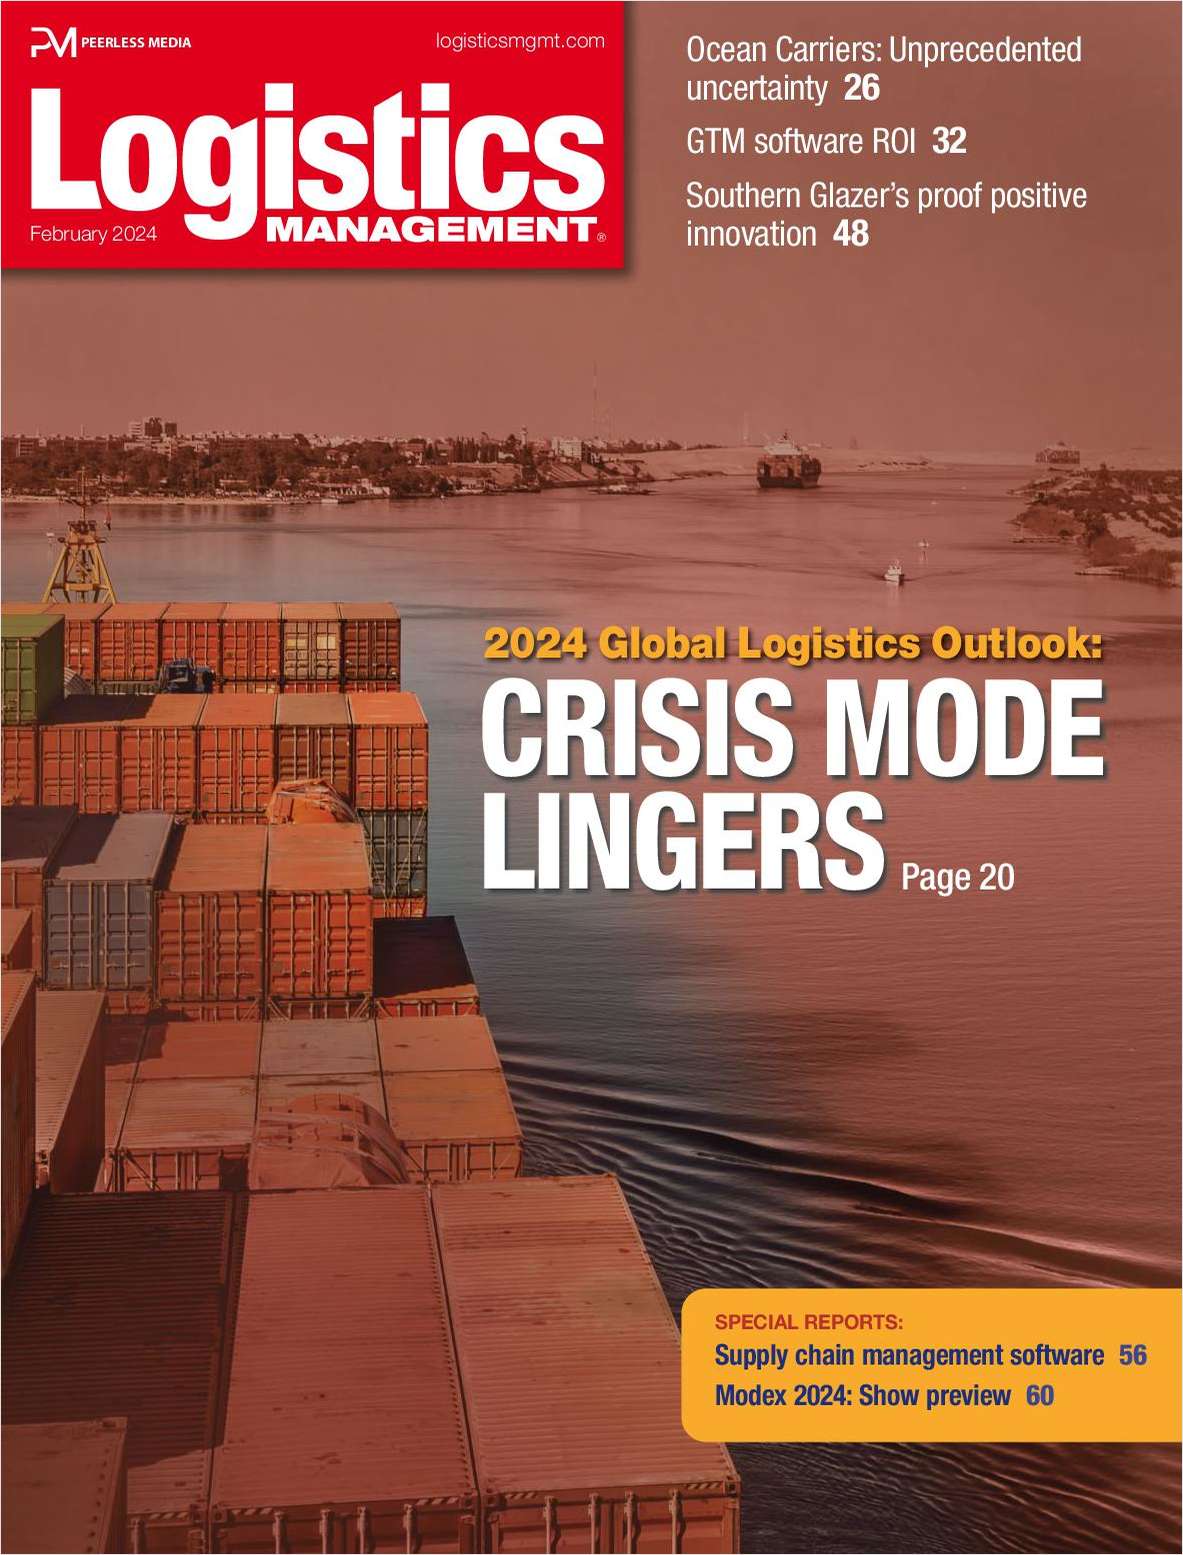 Logistics Management: 2024 Global Logistics Outlook: Crisis mode lingers